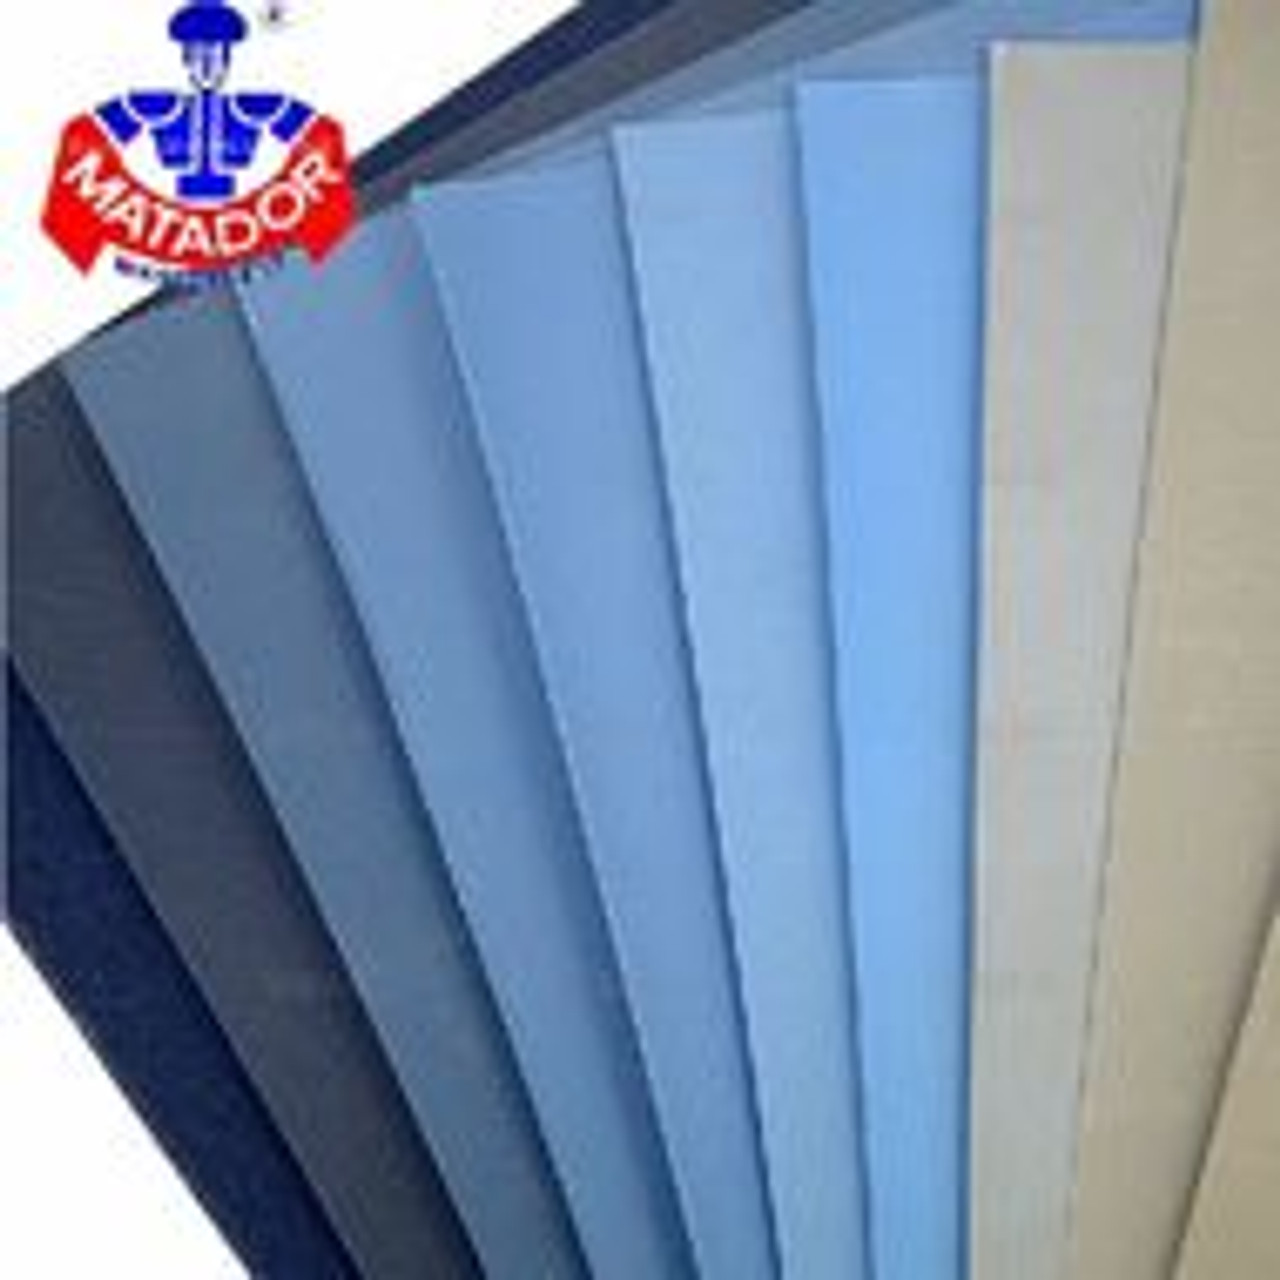 Matador Waterproof Sandpaper Wet or Dry Abrasive Paper 800 Grit Per Pack of 50 Made in Germany